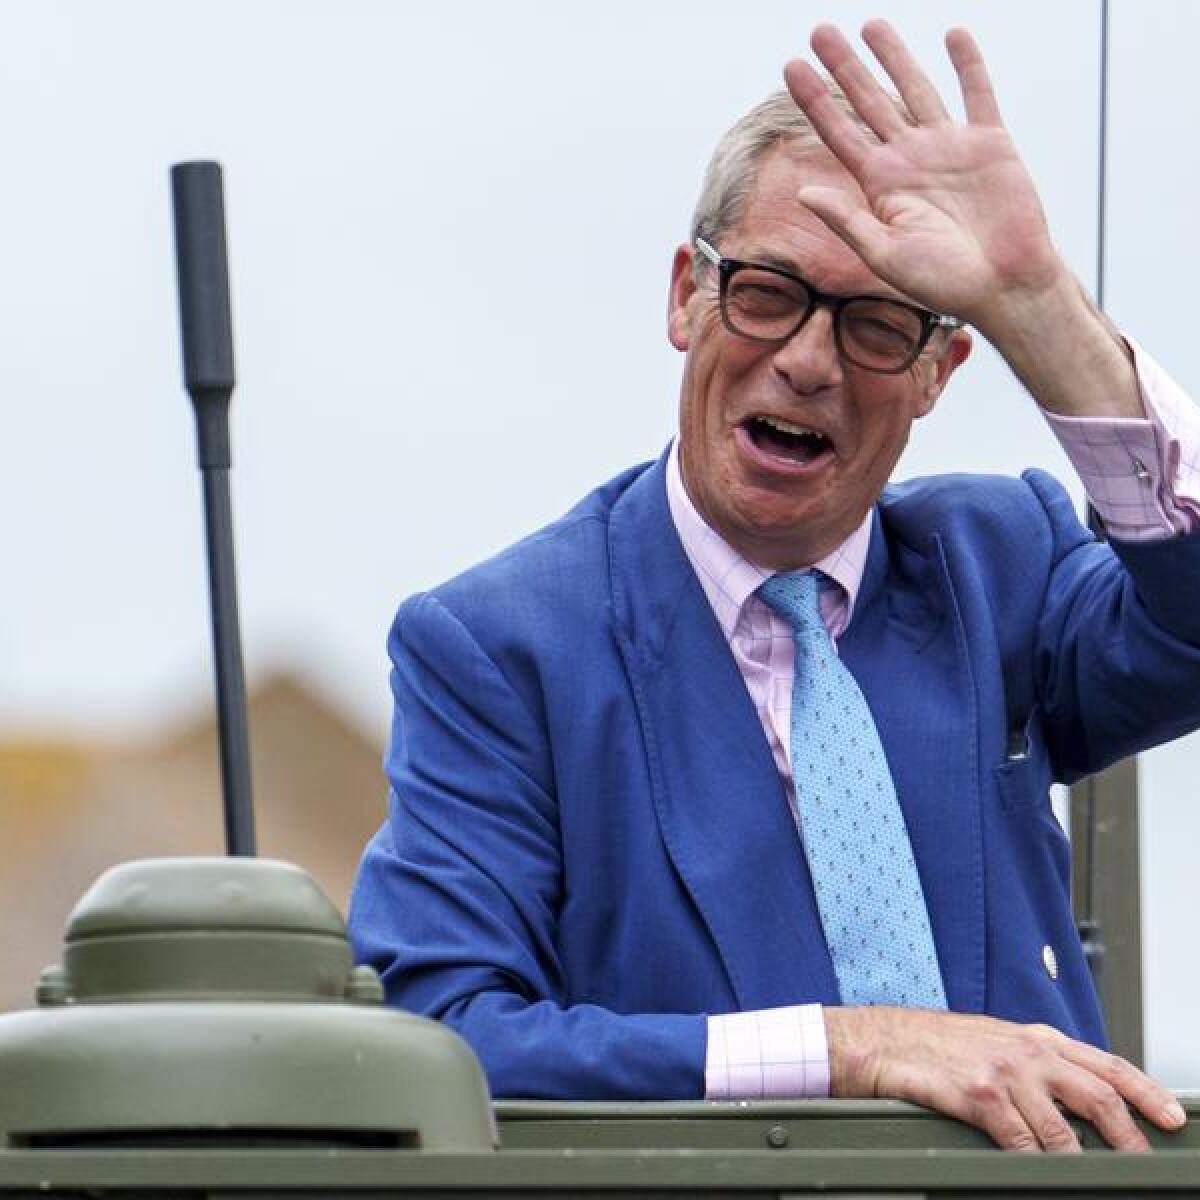 Reform UK leader Nigel Farage, waving from a jeep